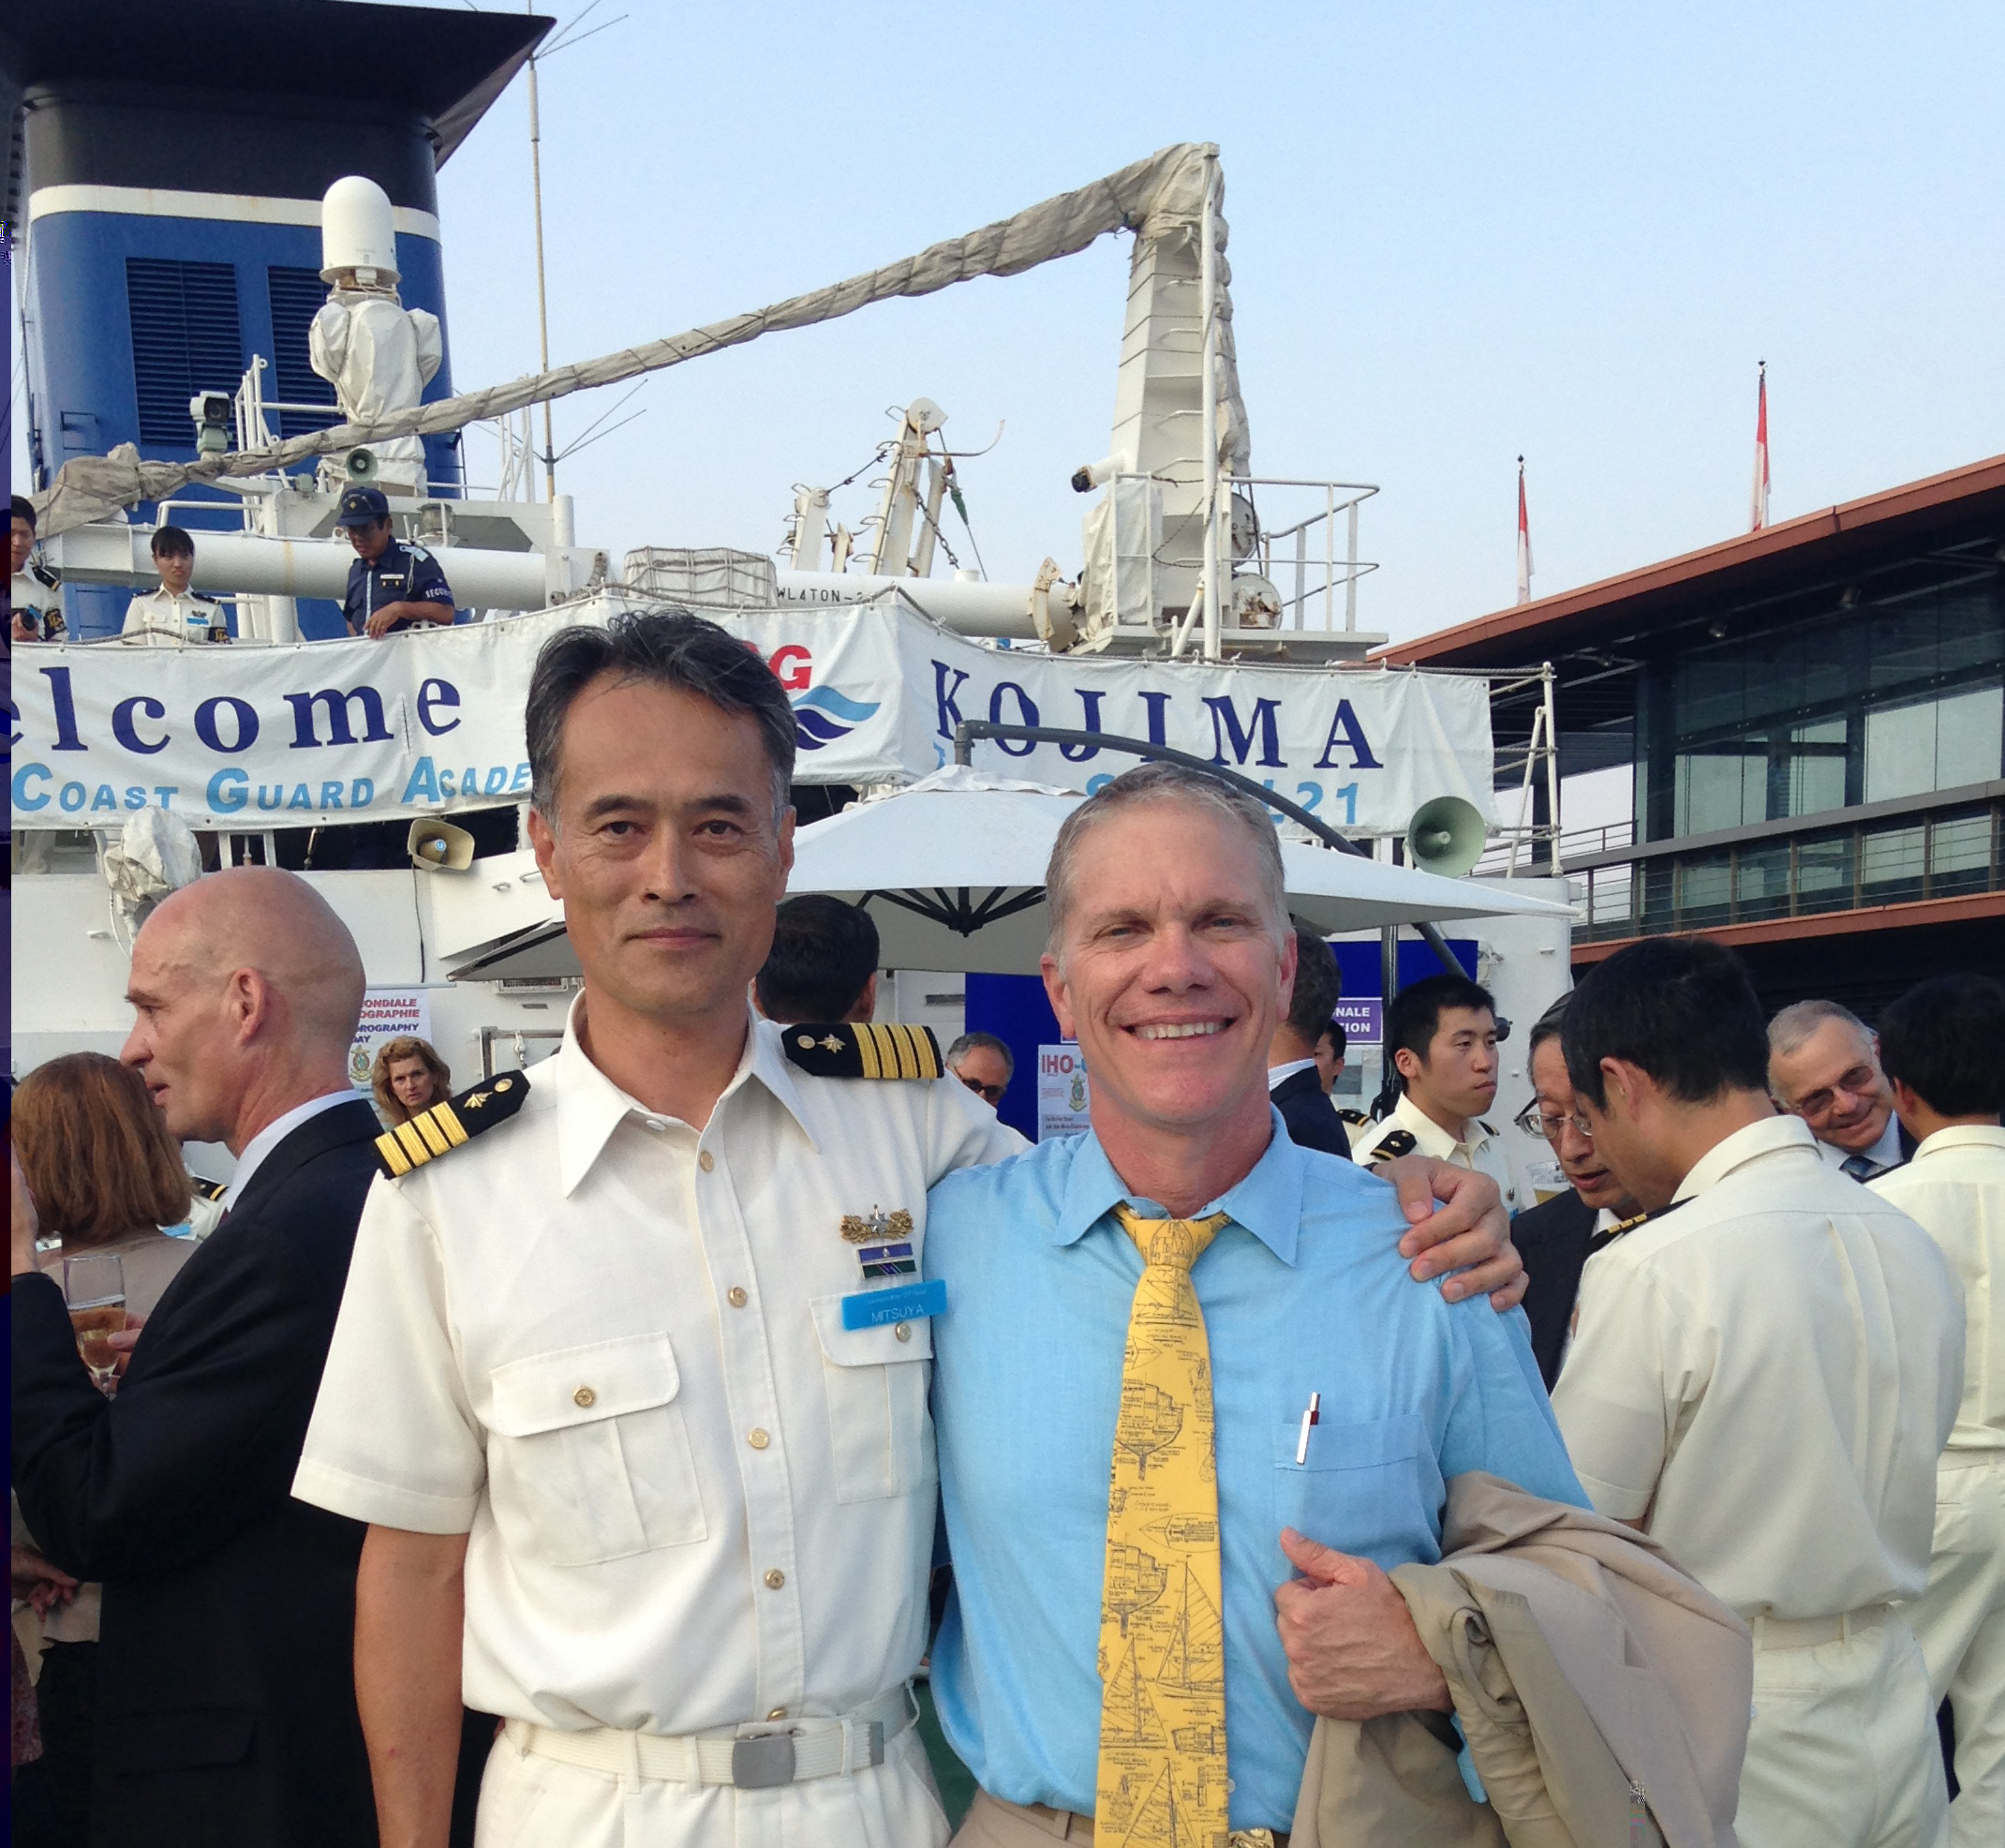 Coast Survey’s Tom Loeper and Captain Tetsushi Mitsuya, commanding officer of the training ship Kojima of Japan Coast Guard, attend the IHO event onboard the Kojima.